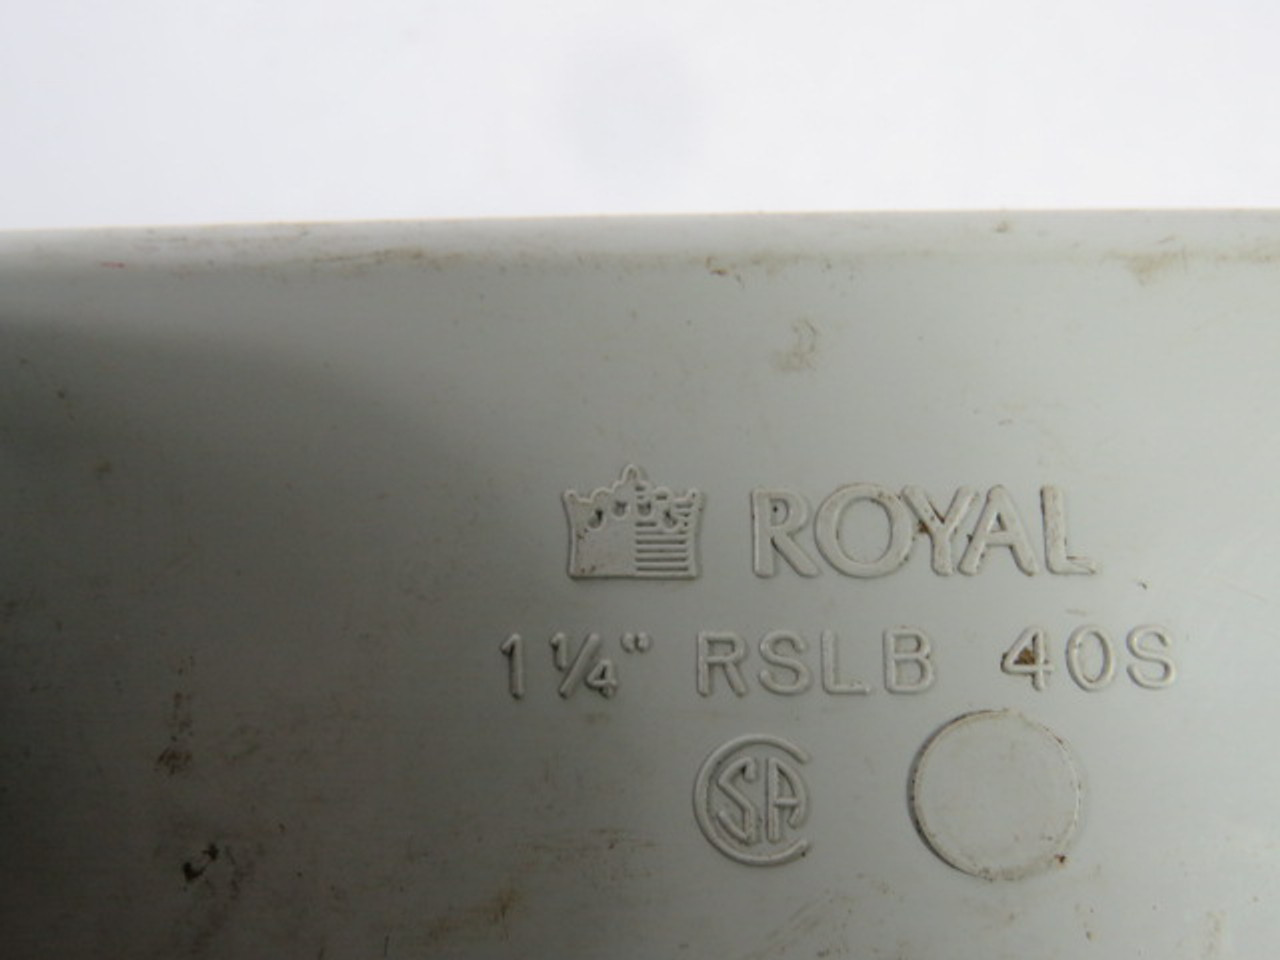 Royal RSLB40S Conduit Body W/ Cover Type LB 2-Hole 1-1/4" NPT USED